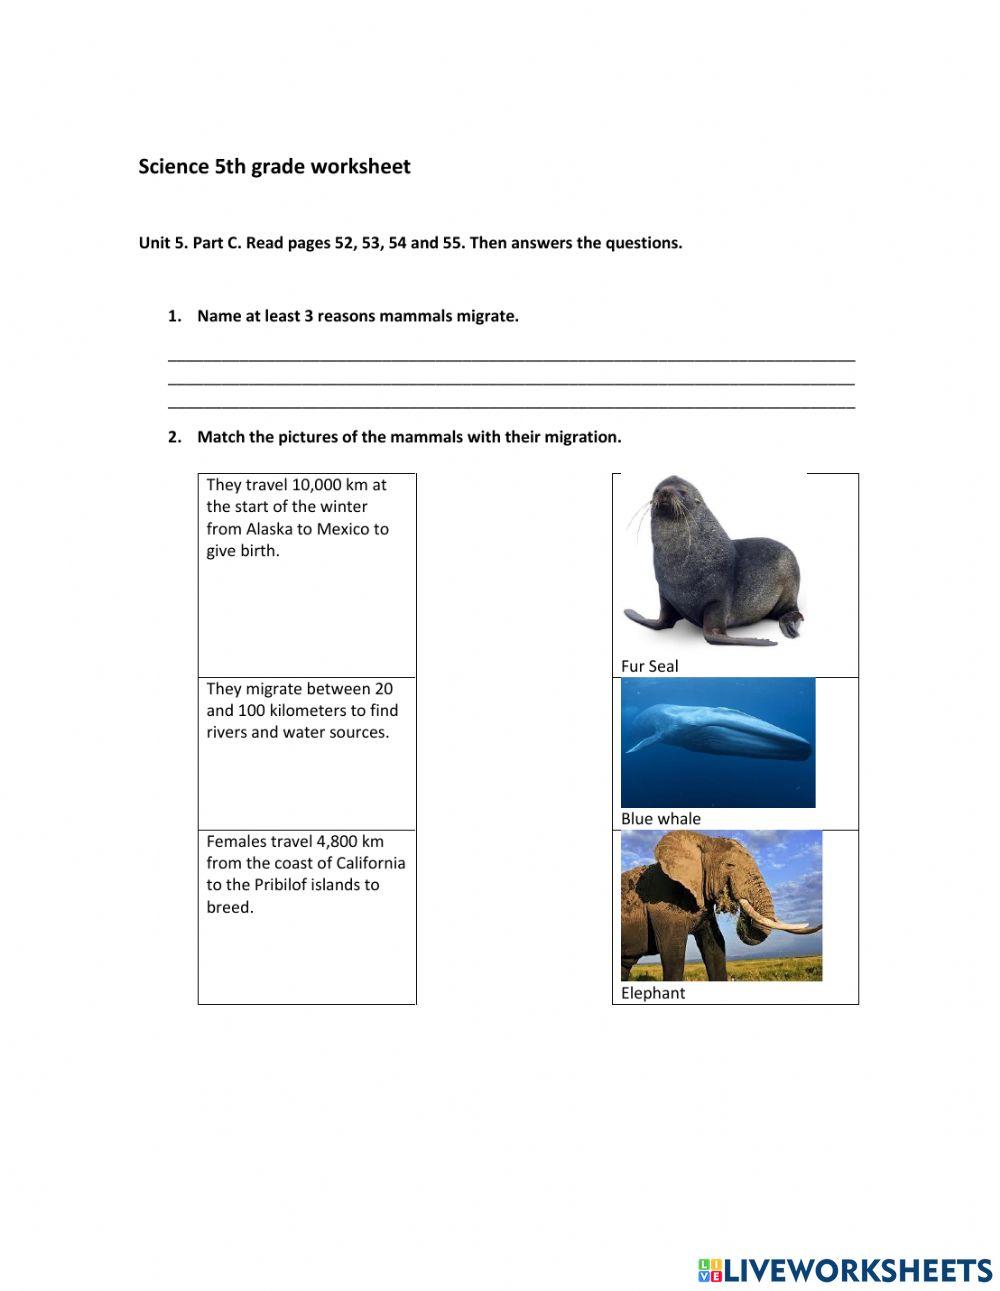 Mammals habits worksheet